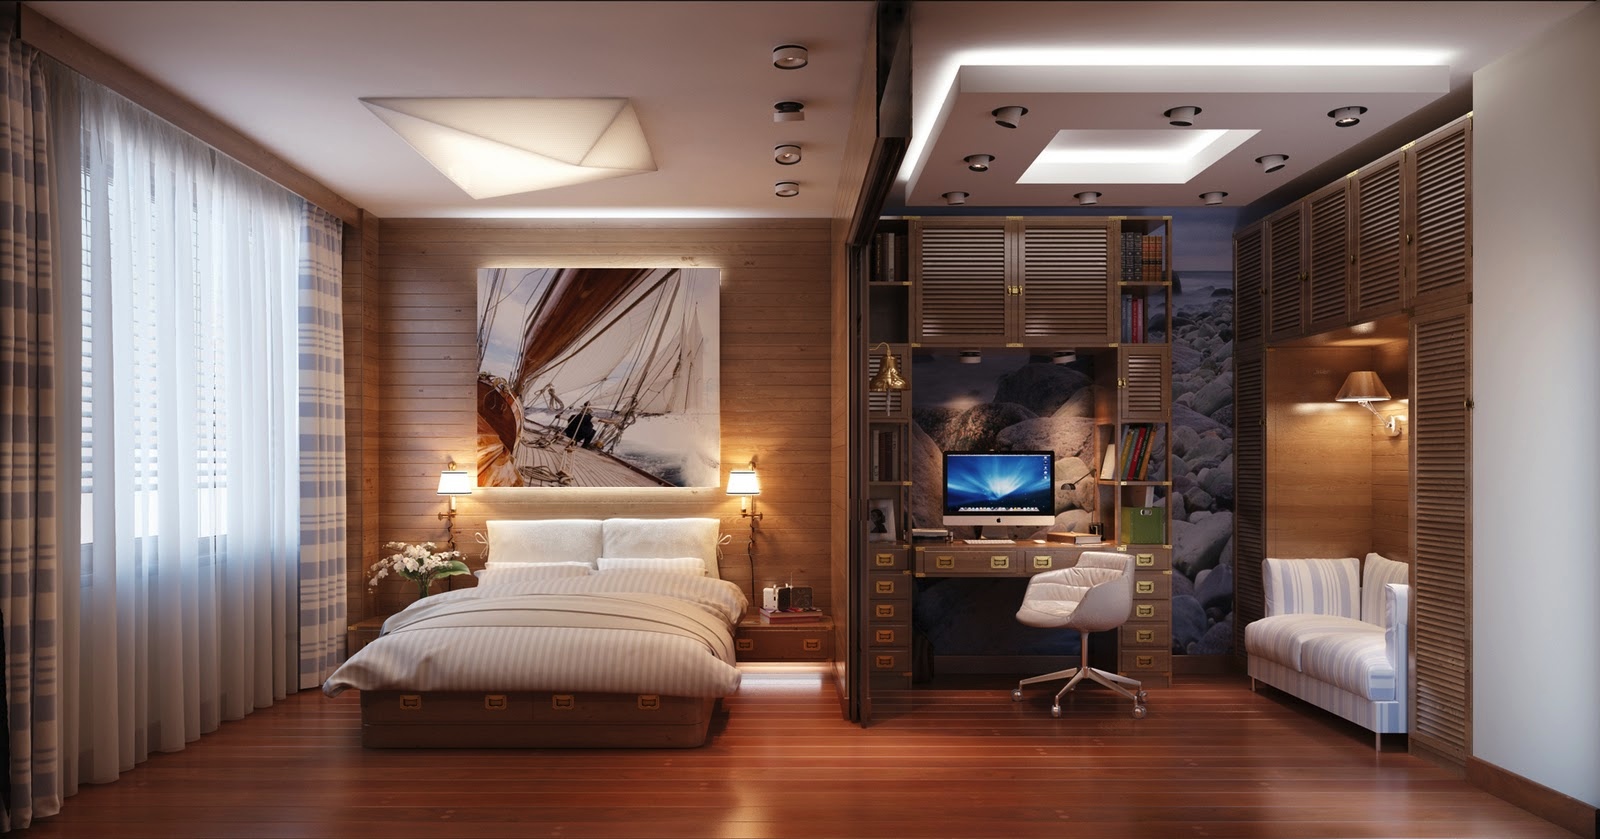 Minimalist Office In Bedroom Ideas 